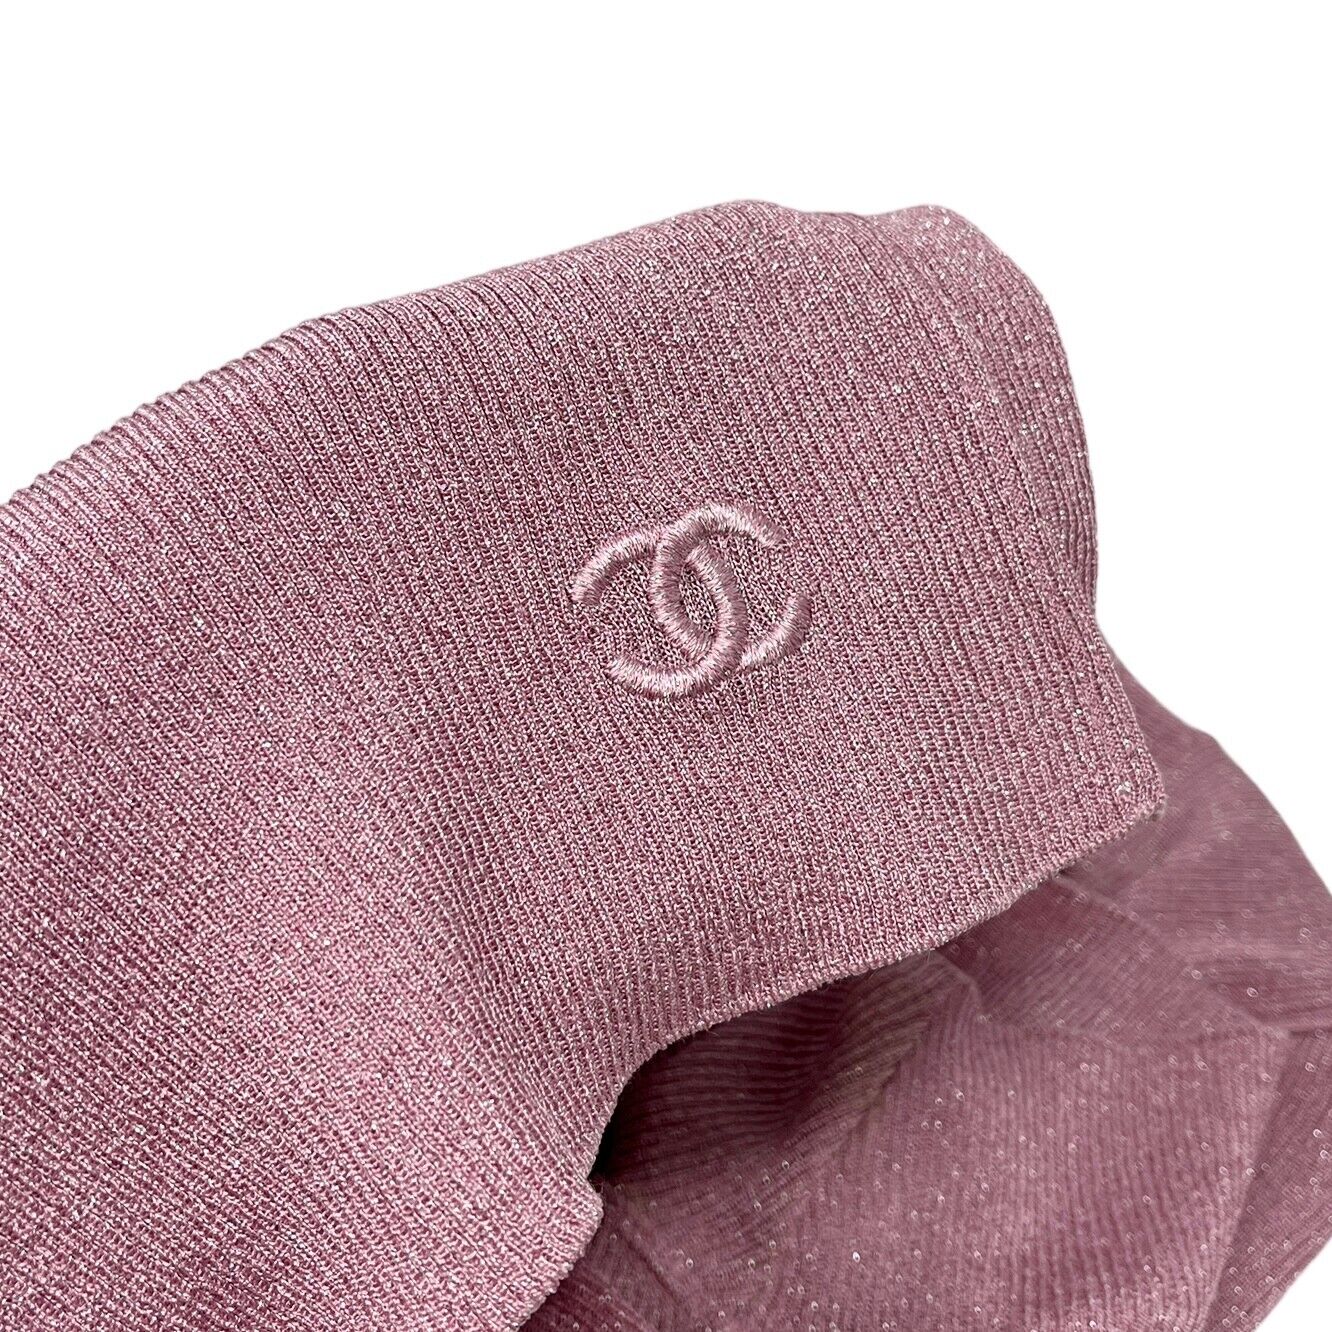 CHANEL Vintage 96A CC Mark Logo Knit Top #38 Turtleneck Pink Glitter RankAB